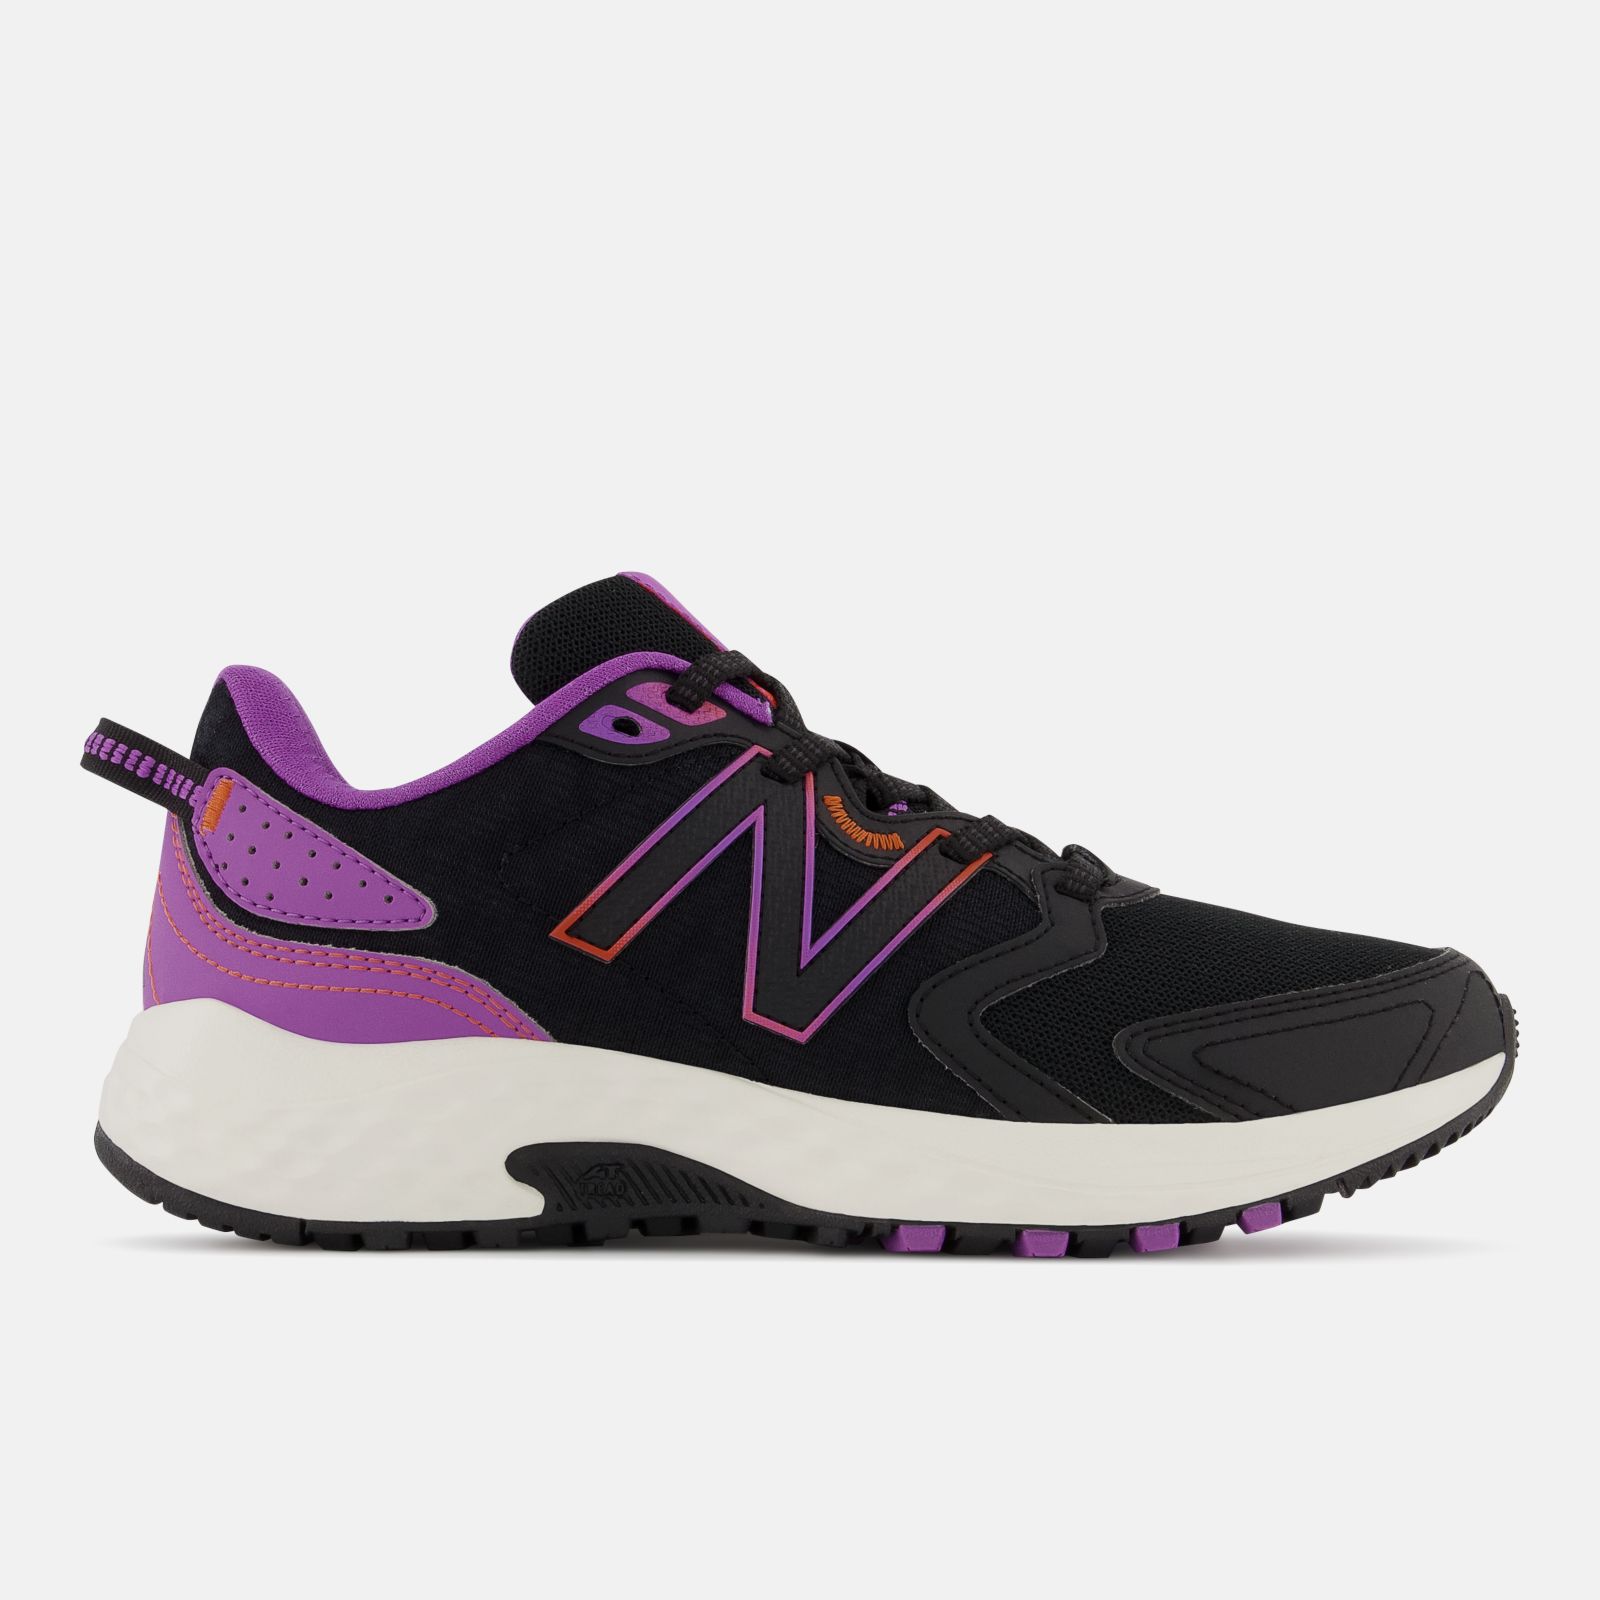 New Balance 410v7, Black / Purple, swatch